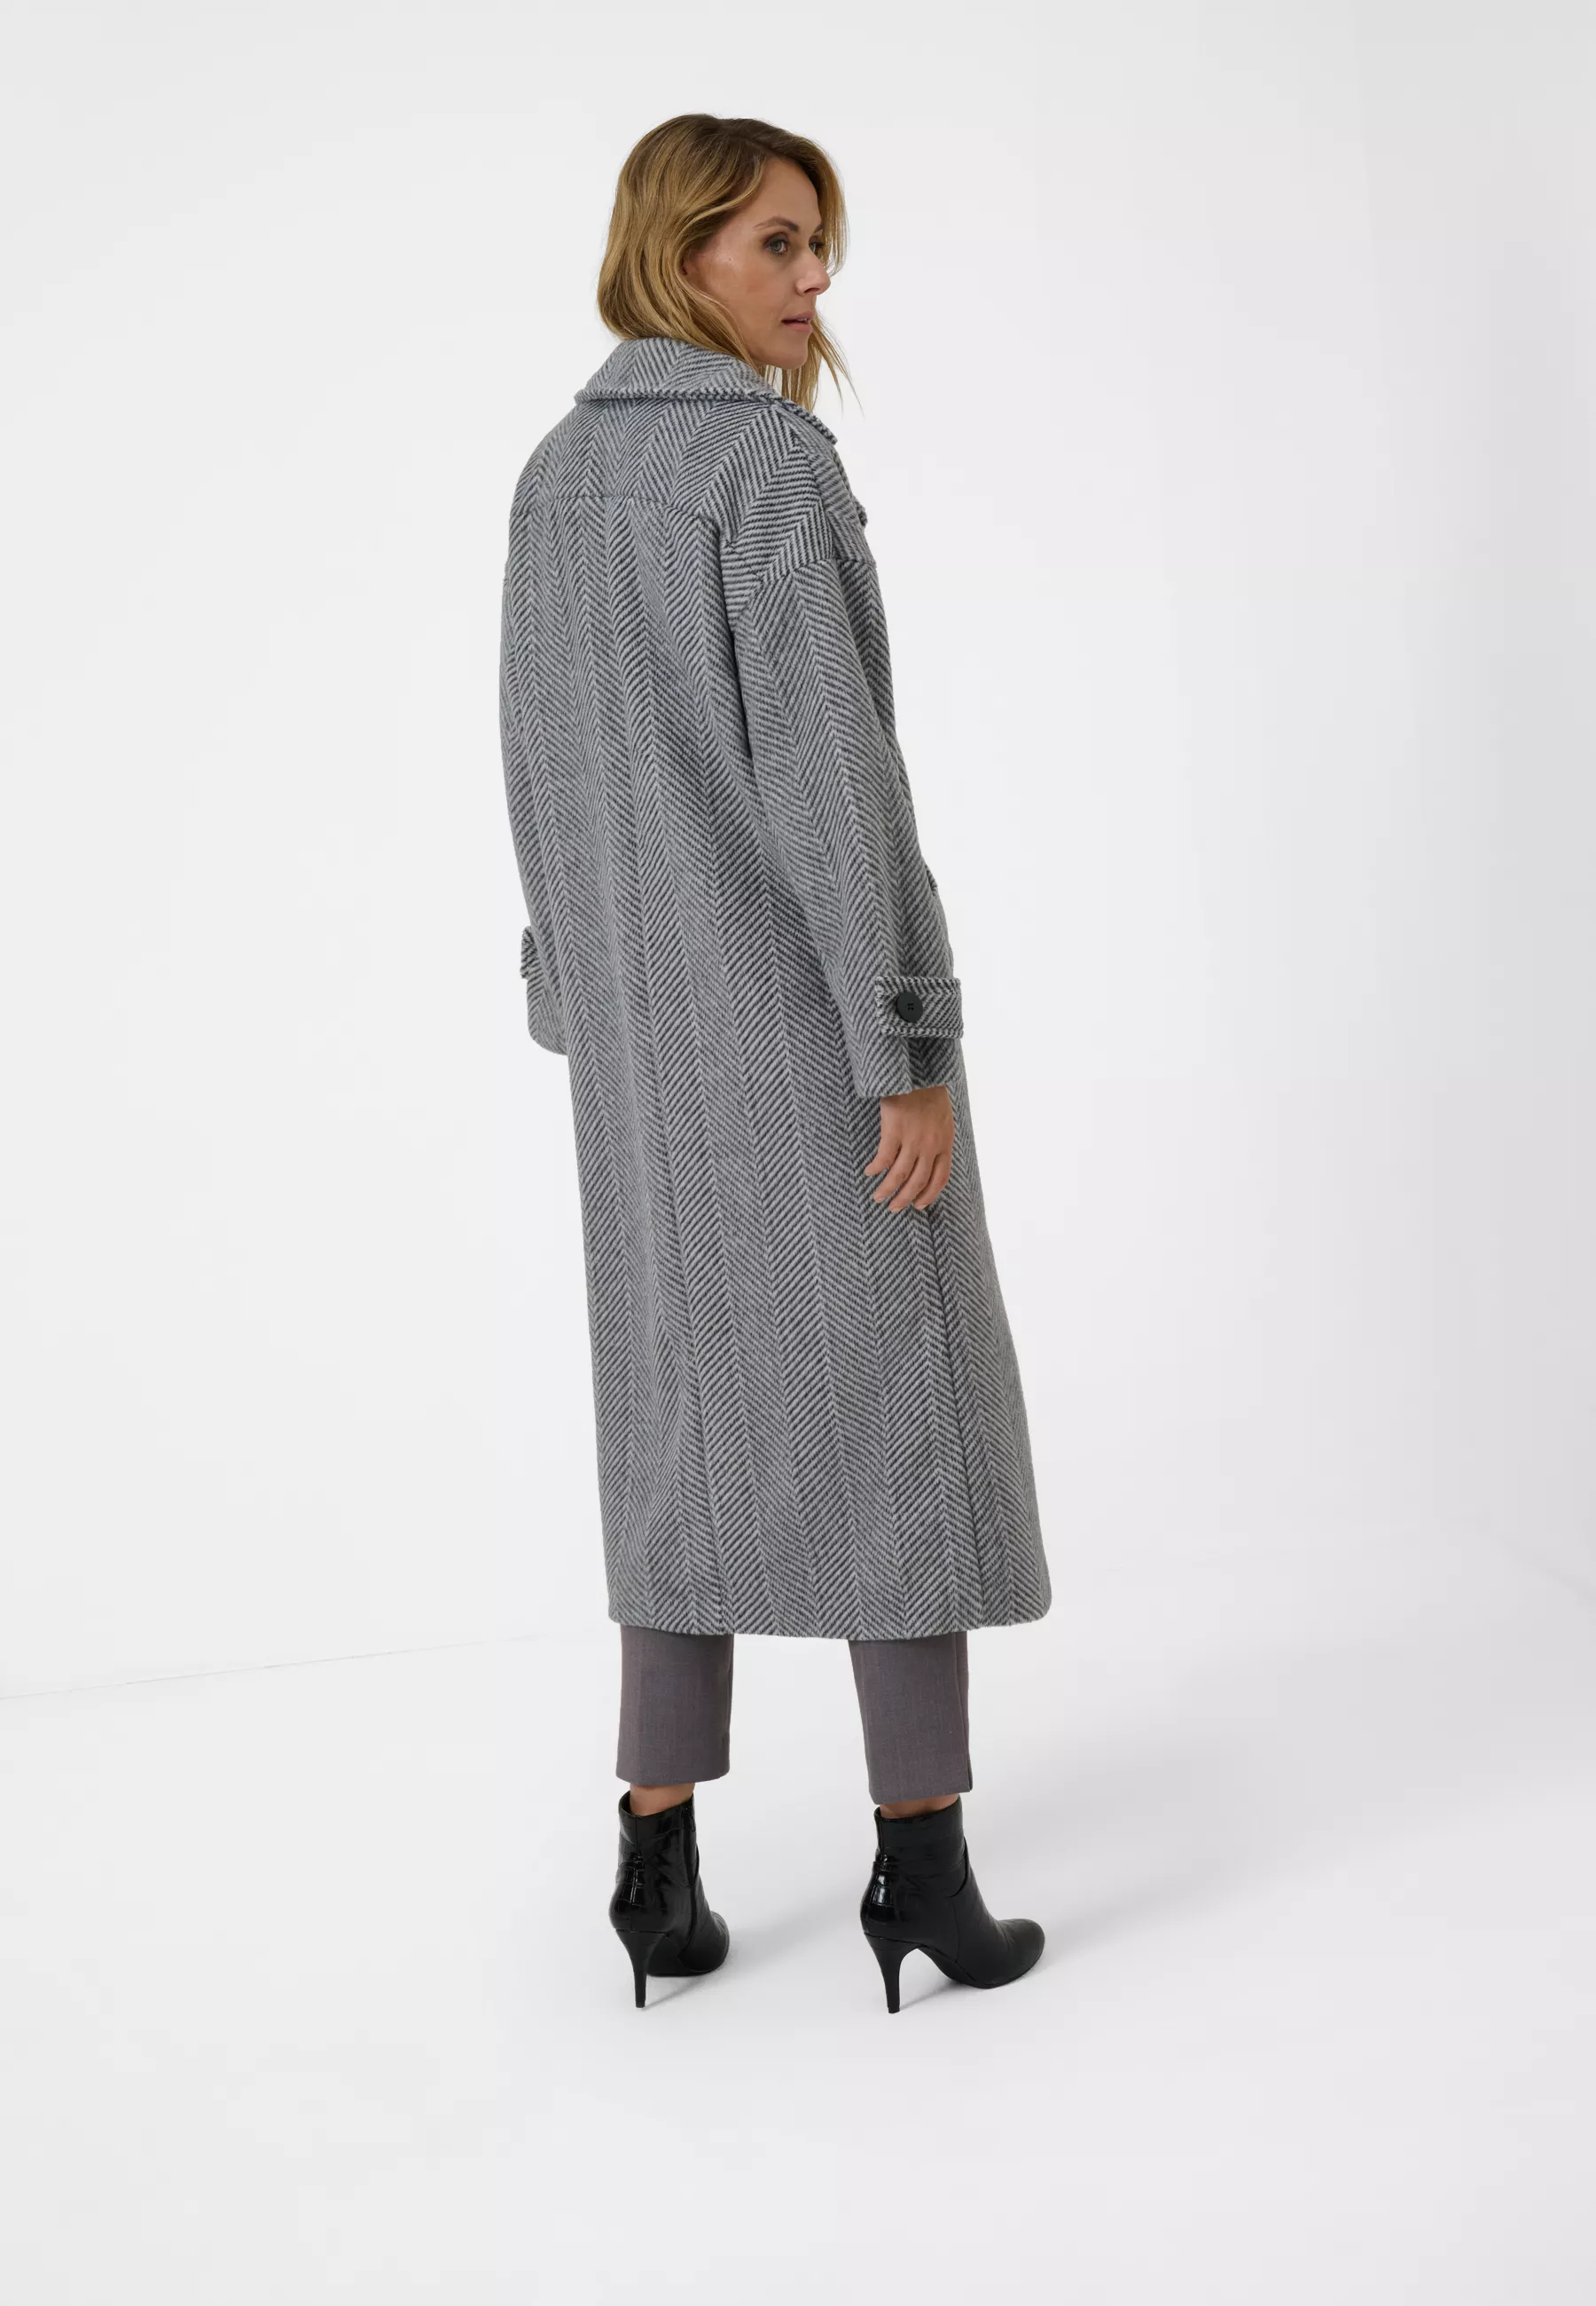 Damen Textil Mantel Franca in Grau gestreift von Ricano, Rückansicht am Model